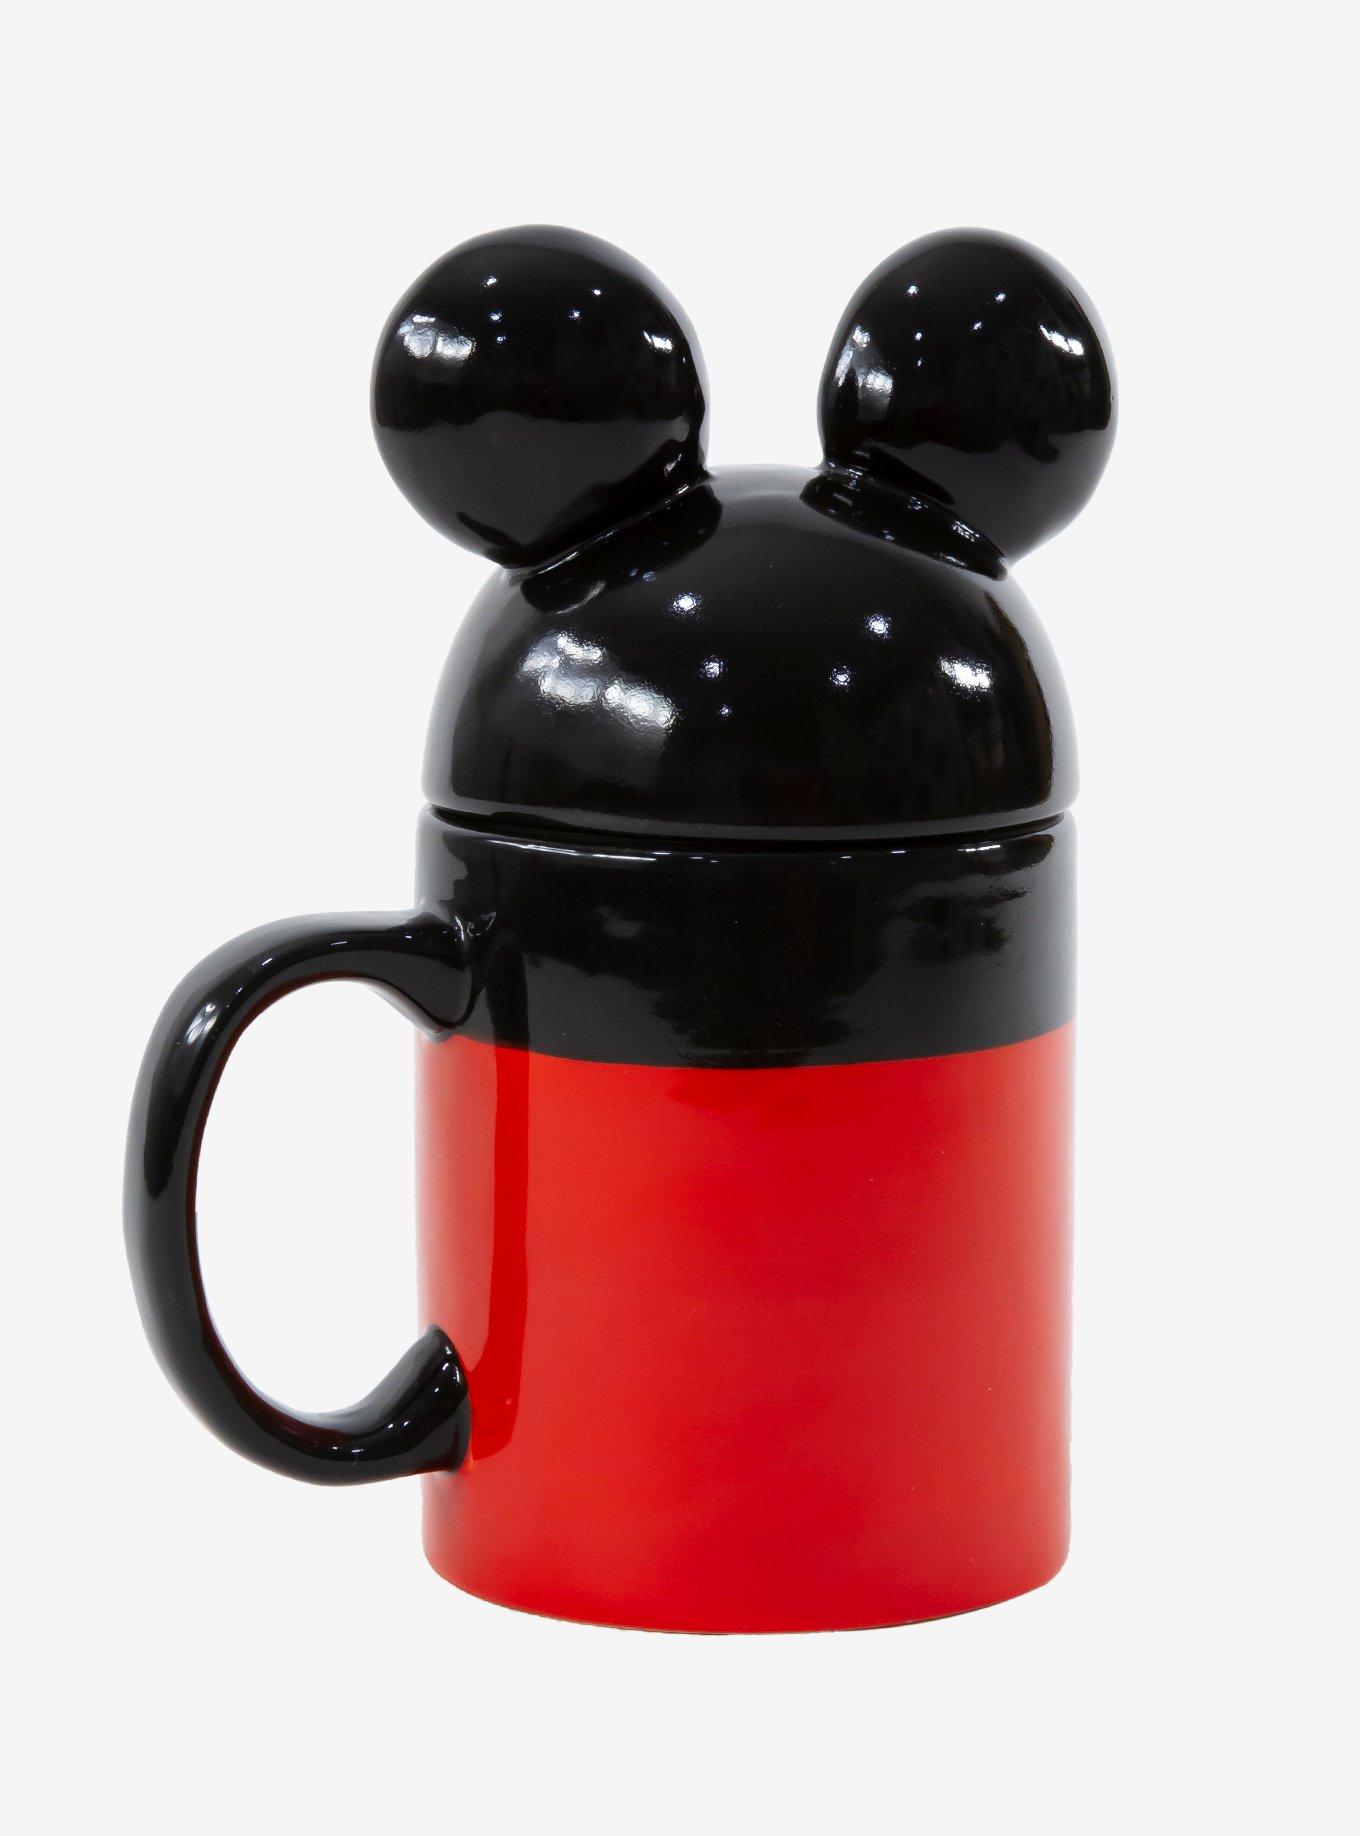 Disney Coffee Mug - Mickey Mouse Portrait-KitMugs-2584